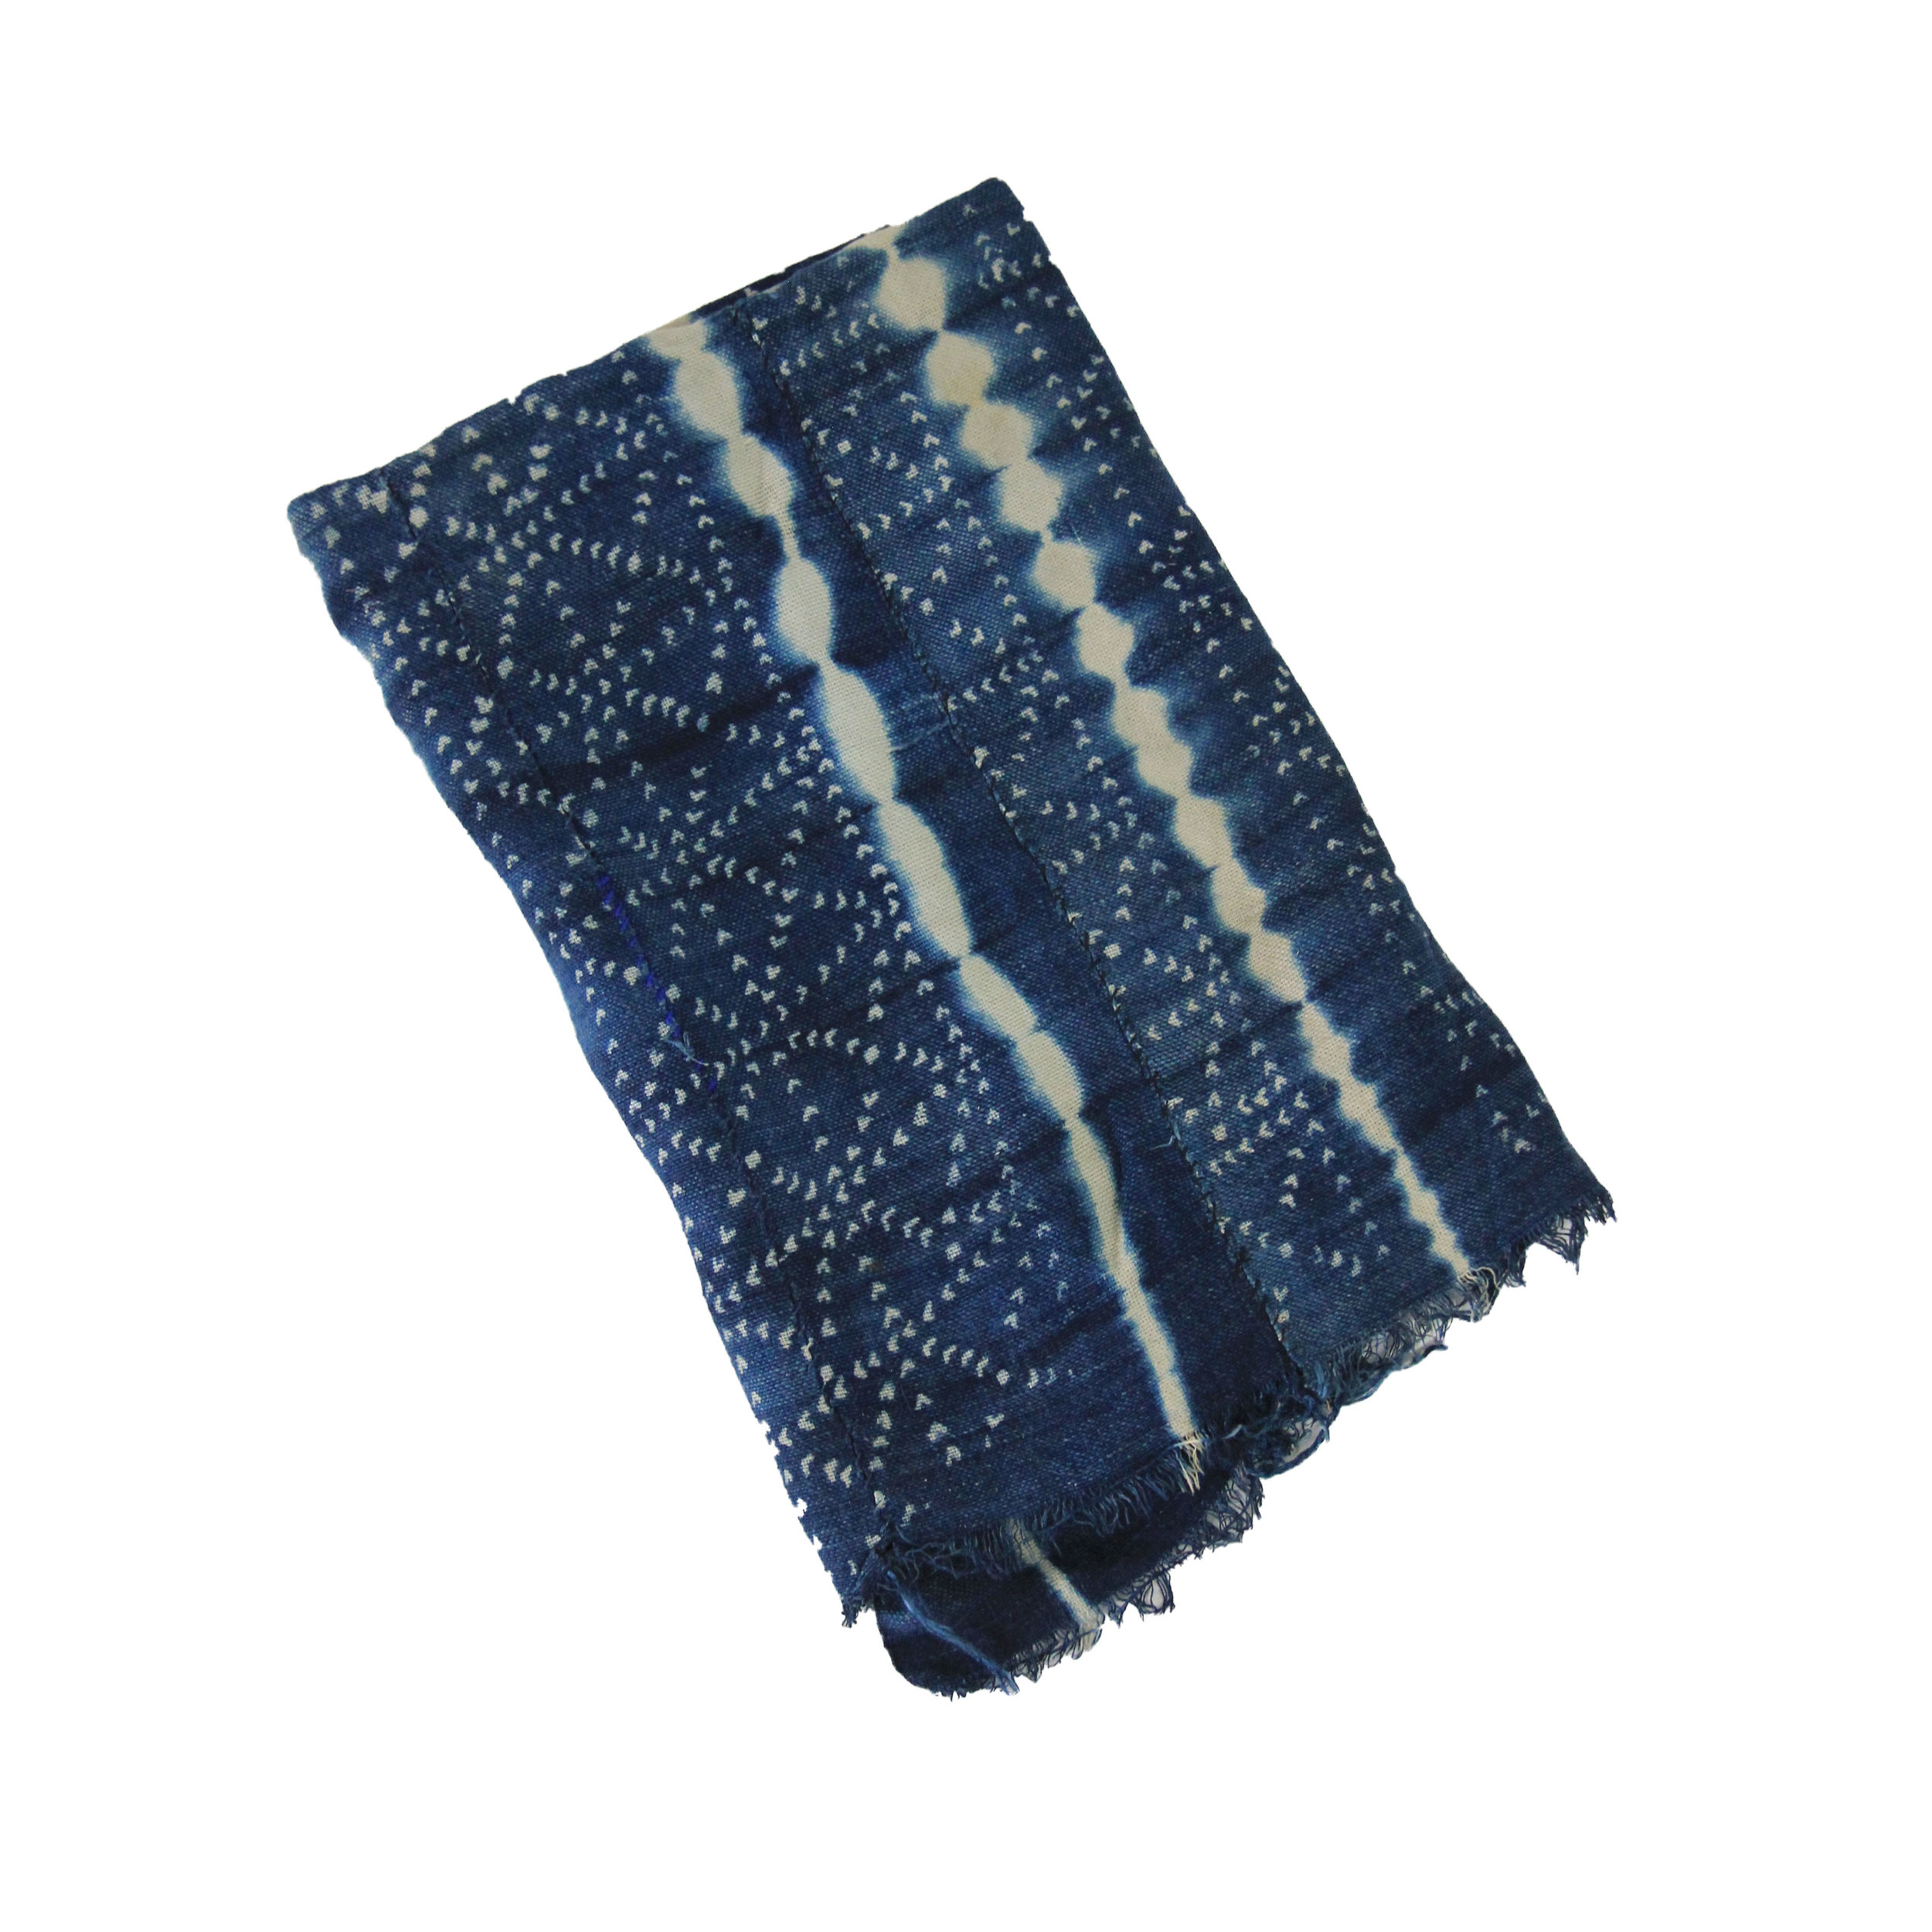 Vintage African Indigo Fabric